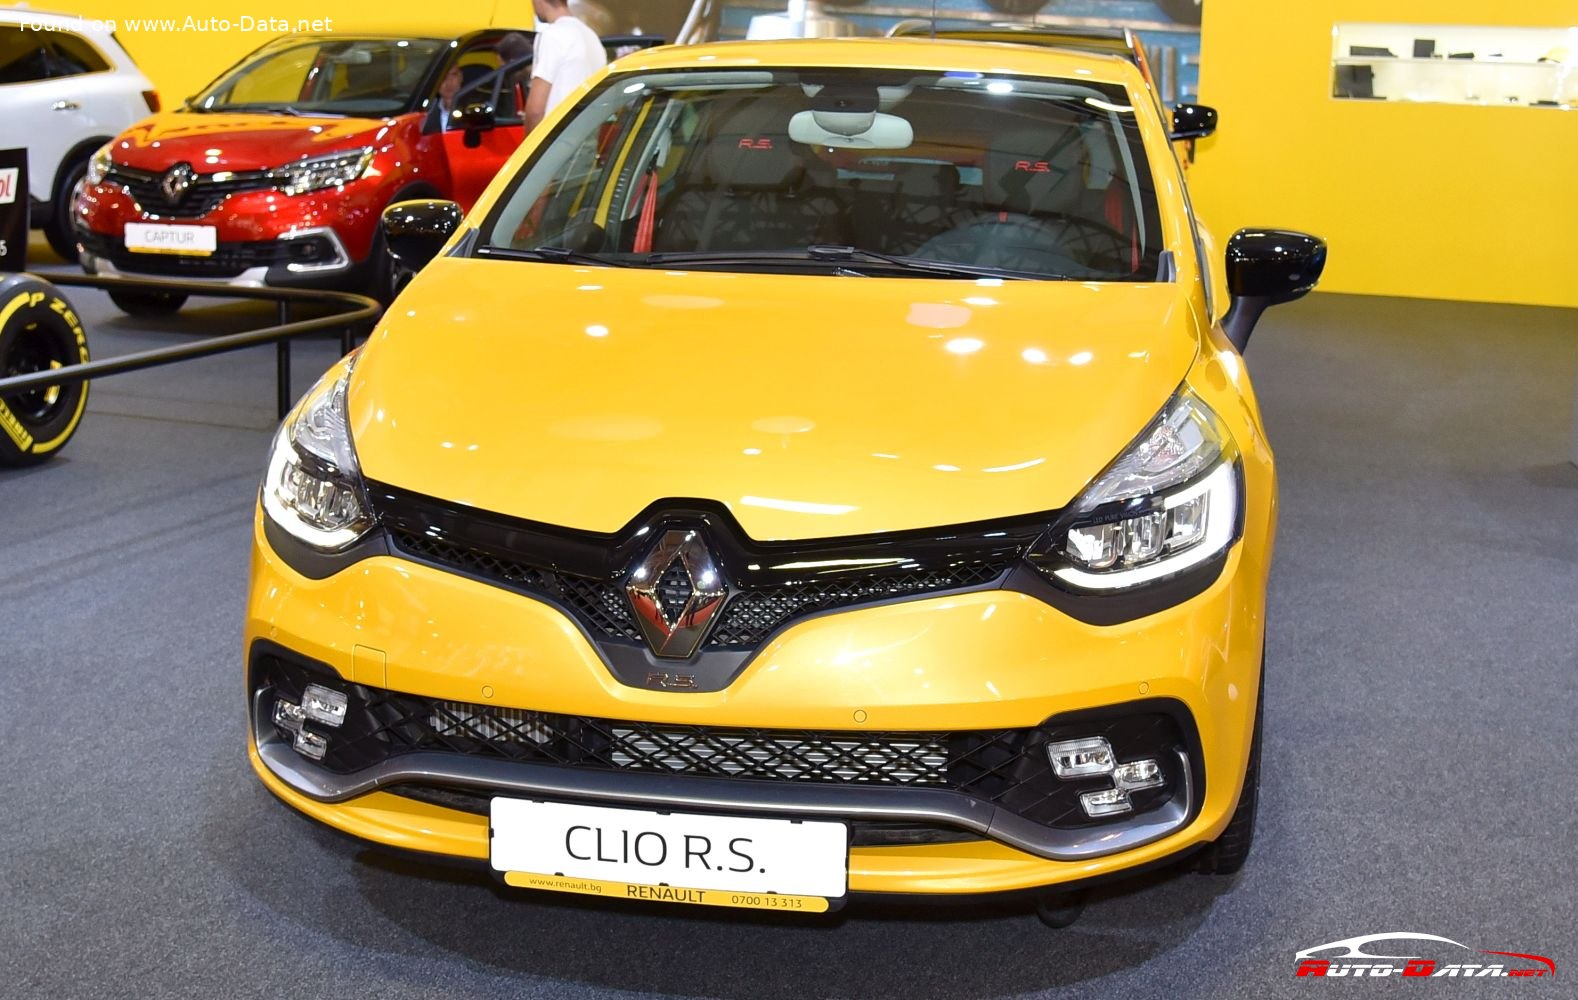 https://www.auto-data.net/images/f114/Renault-Clio-IV-facelift-2016.jpg